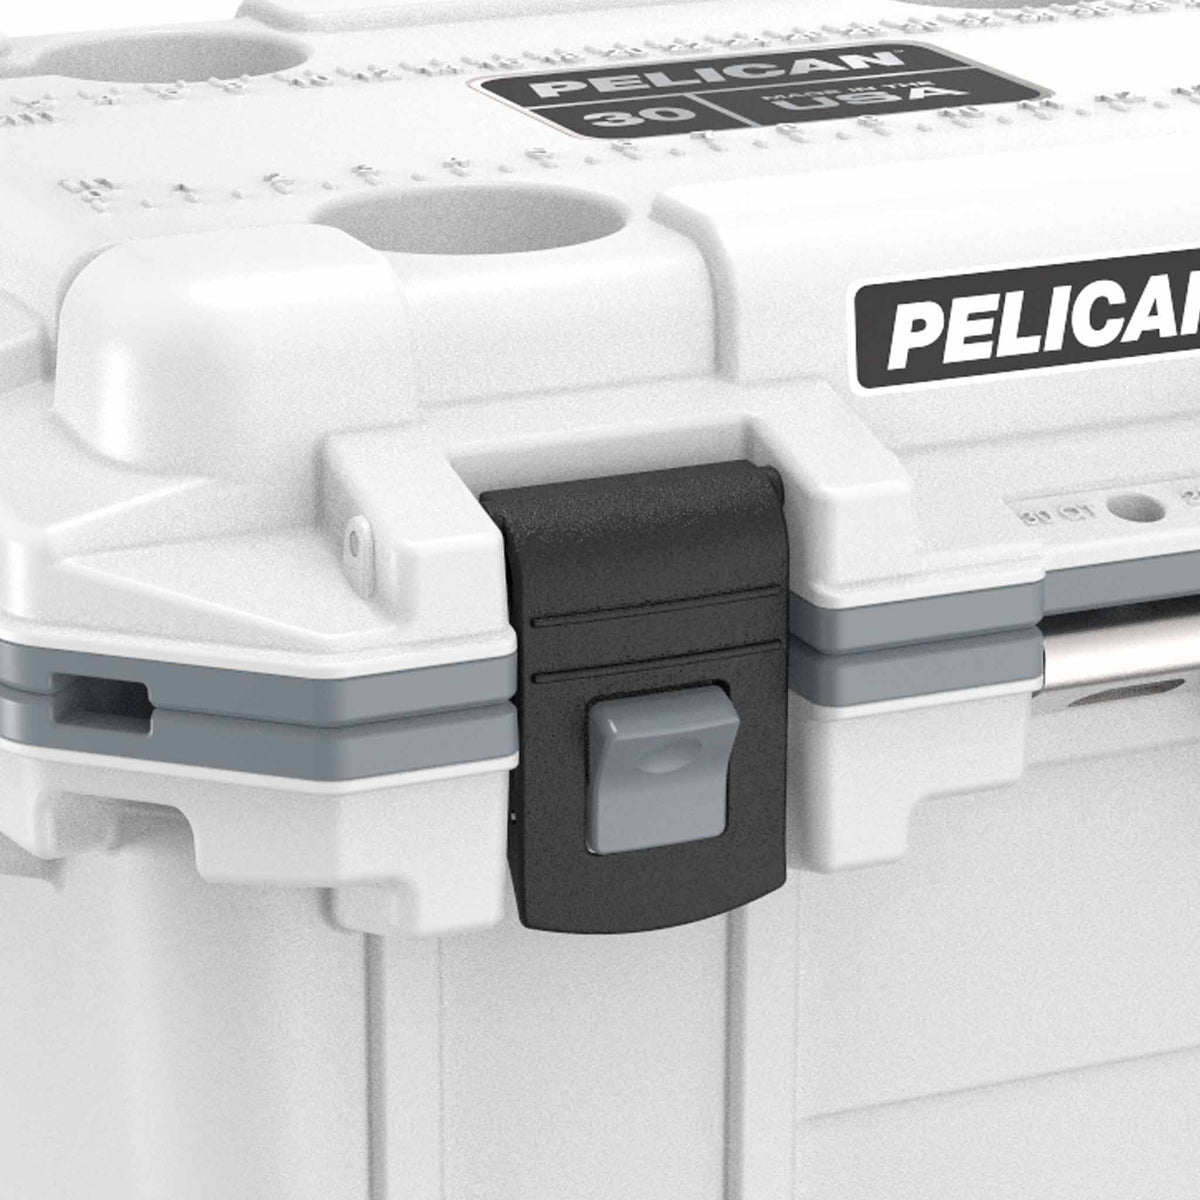 30QT Pelican Elite Cooler has easy press &amp; pull latches